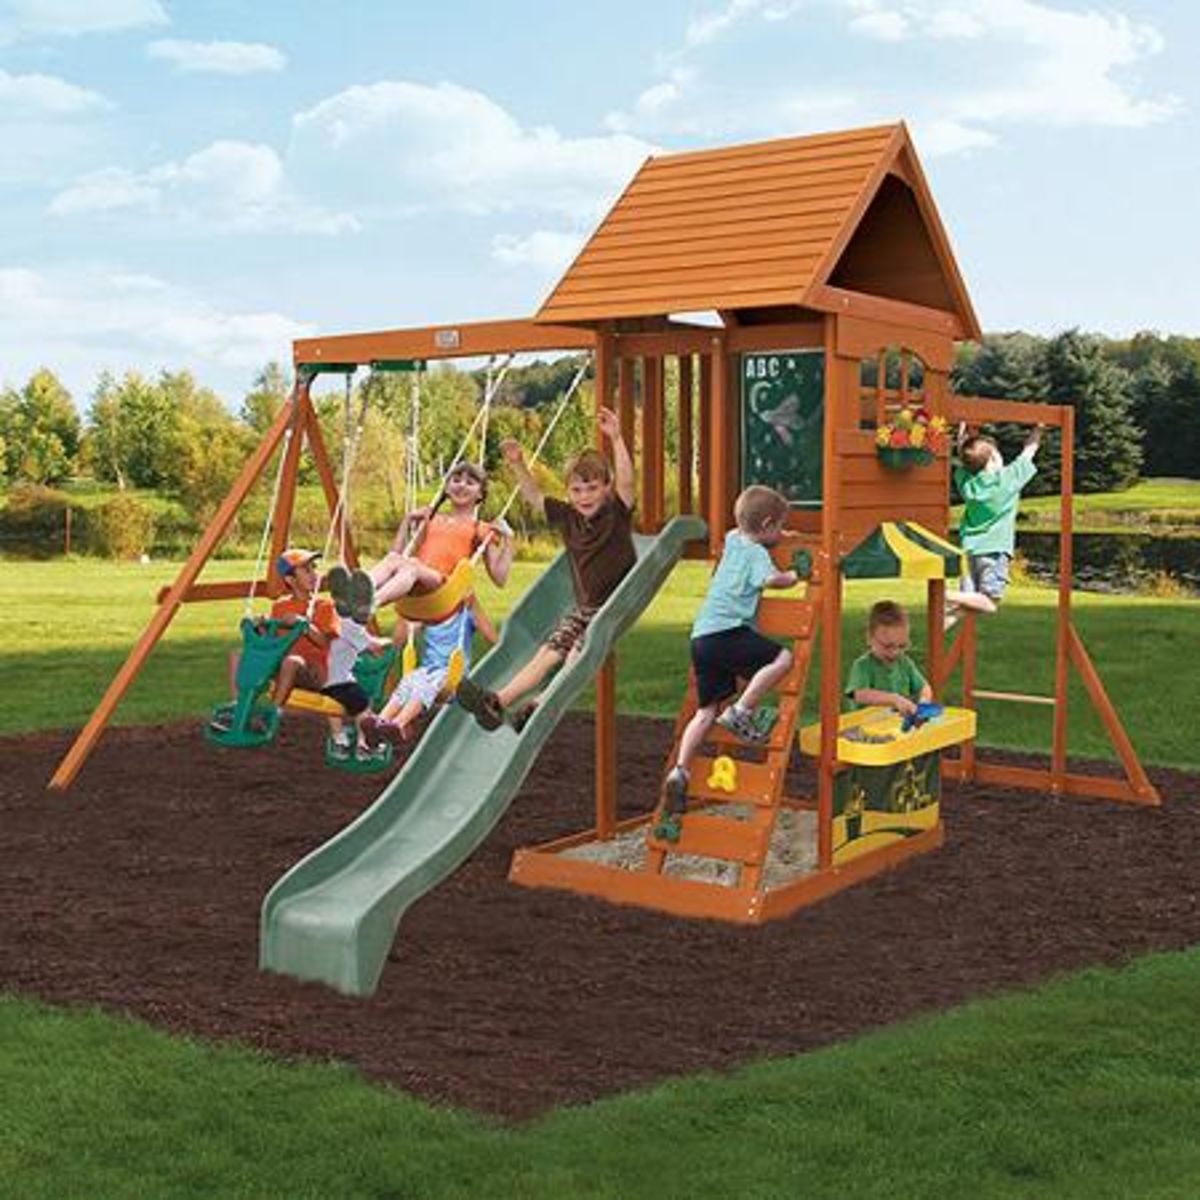 Best-Rated Wooden Backyard Swing Sets For Older Kids On Sale - HeaDline?ver=5779905173